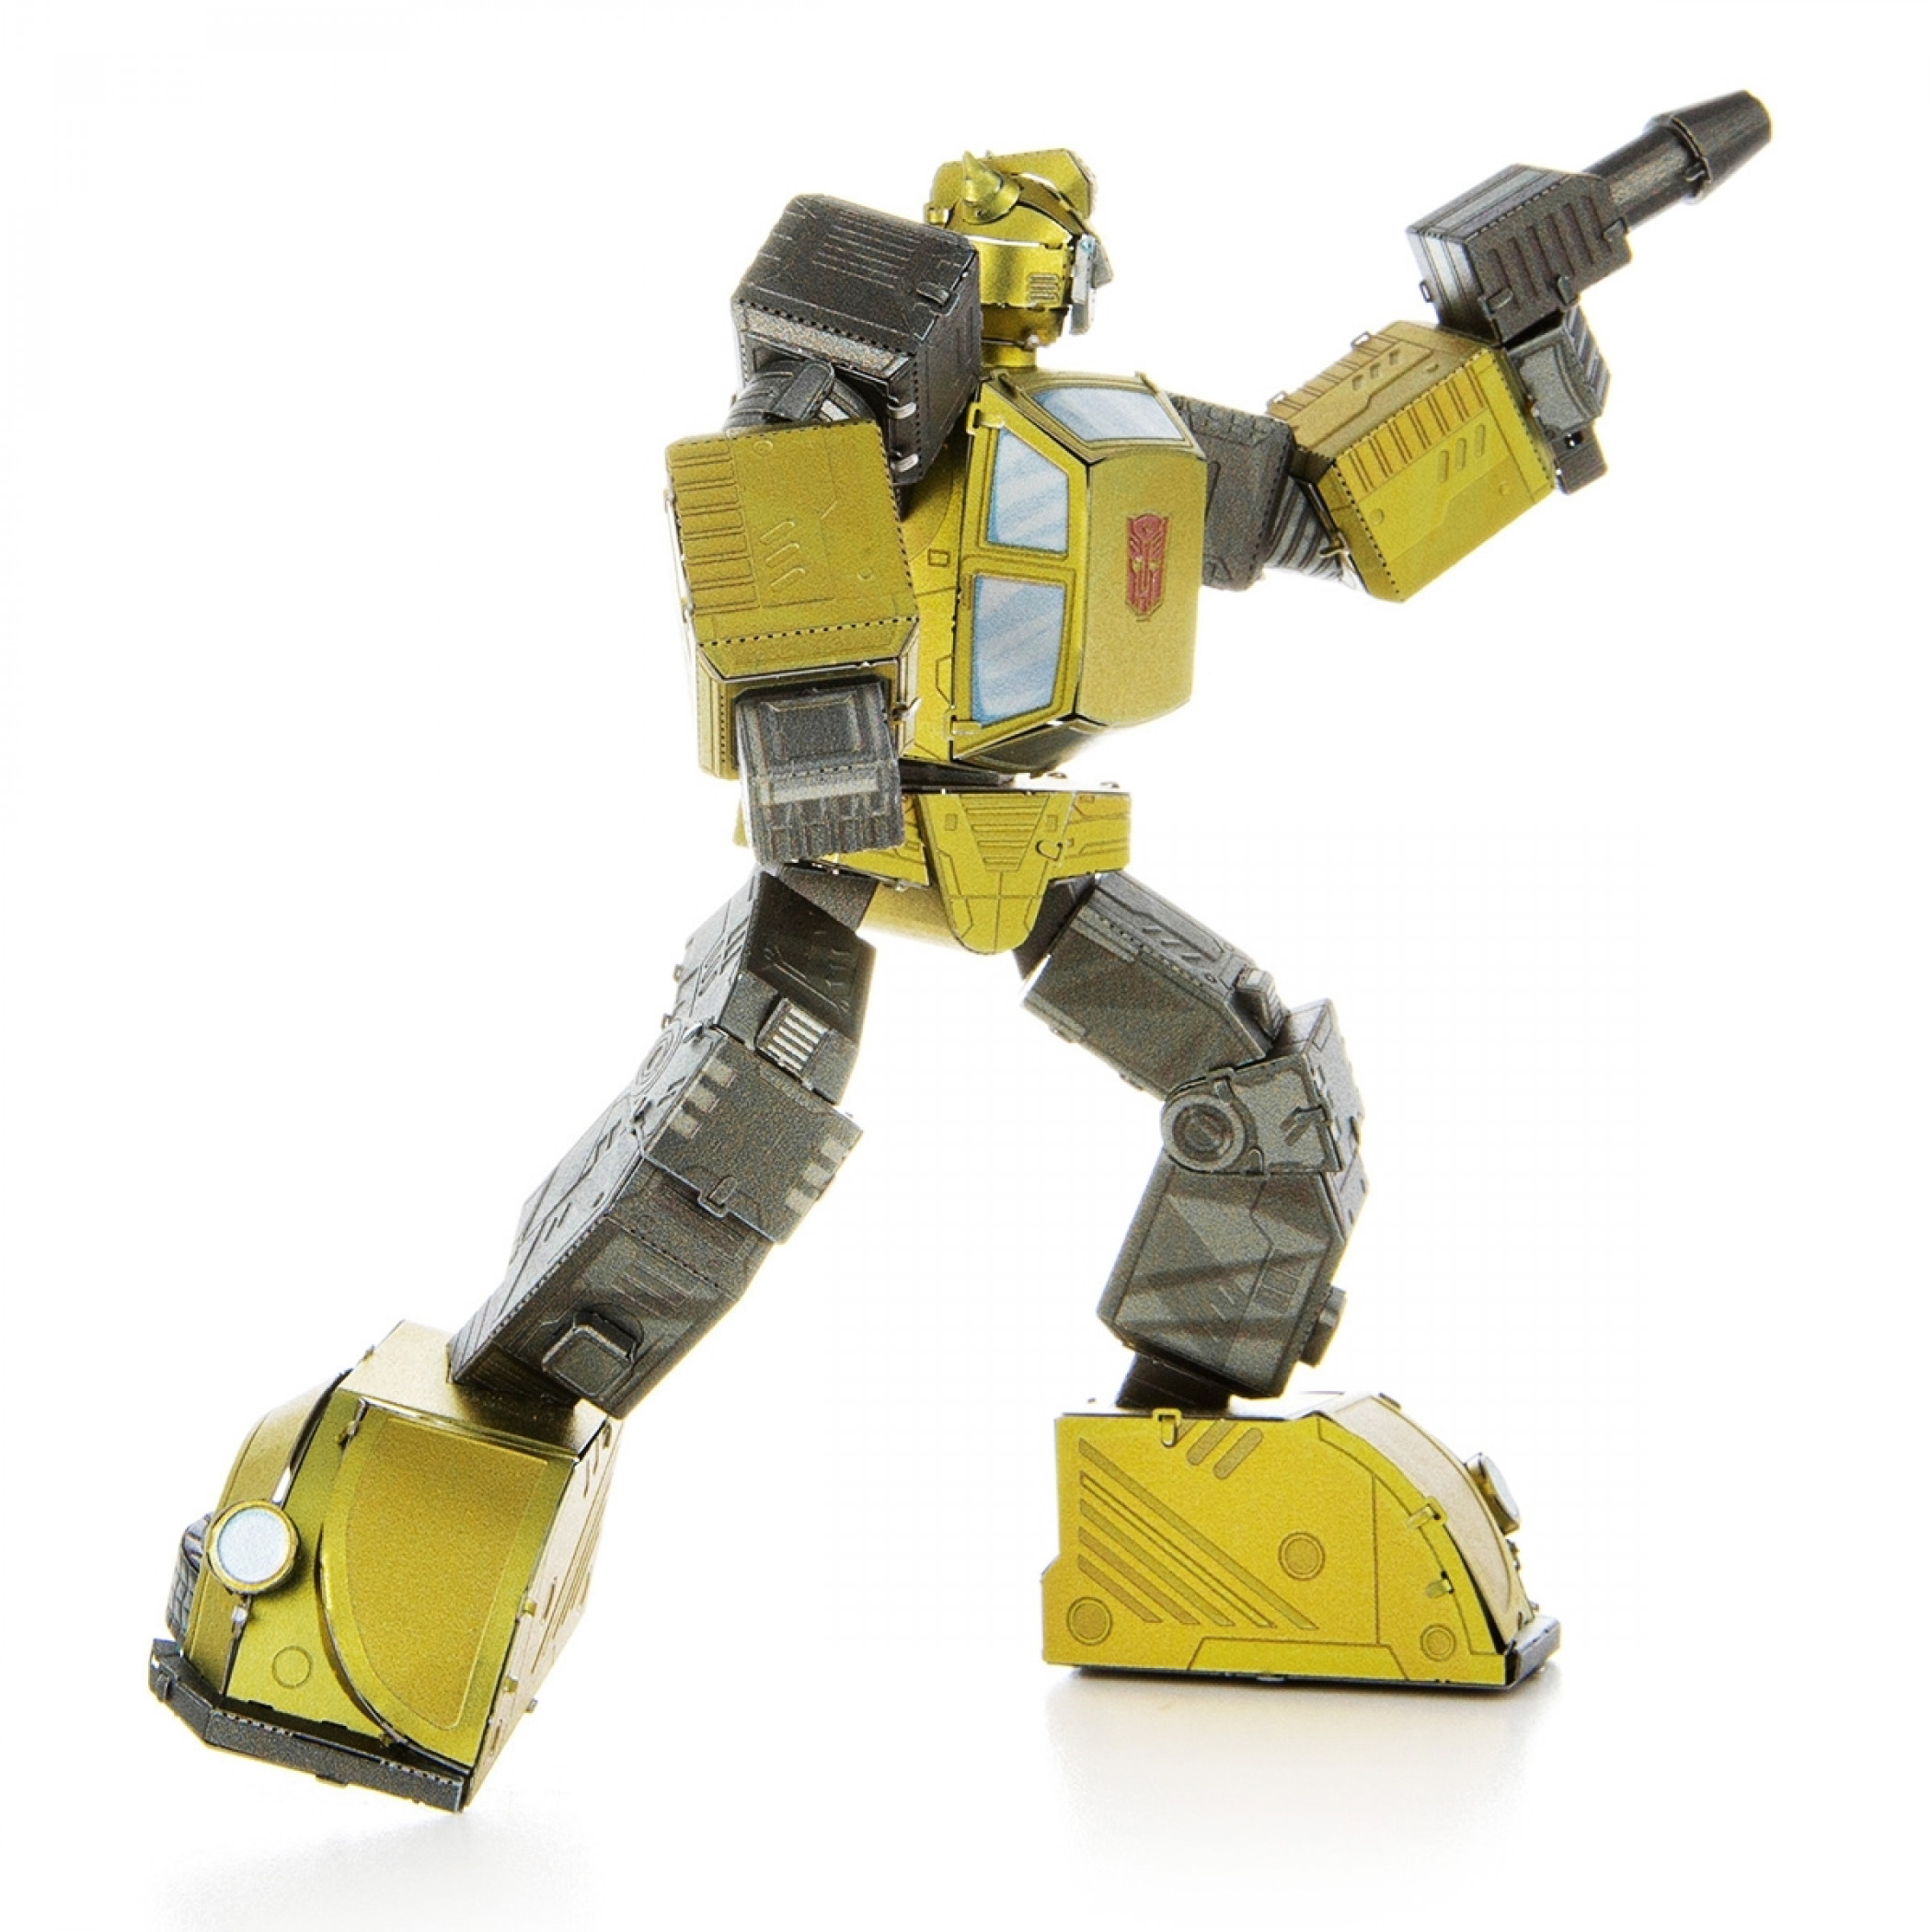 Transformers Bumblebee Metal Earth Model Kit